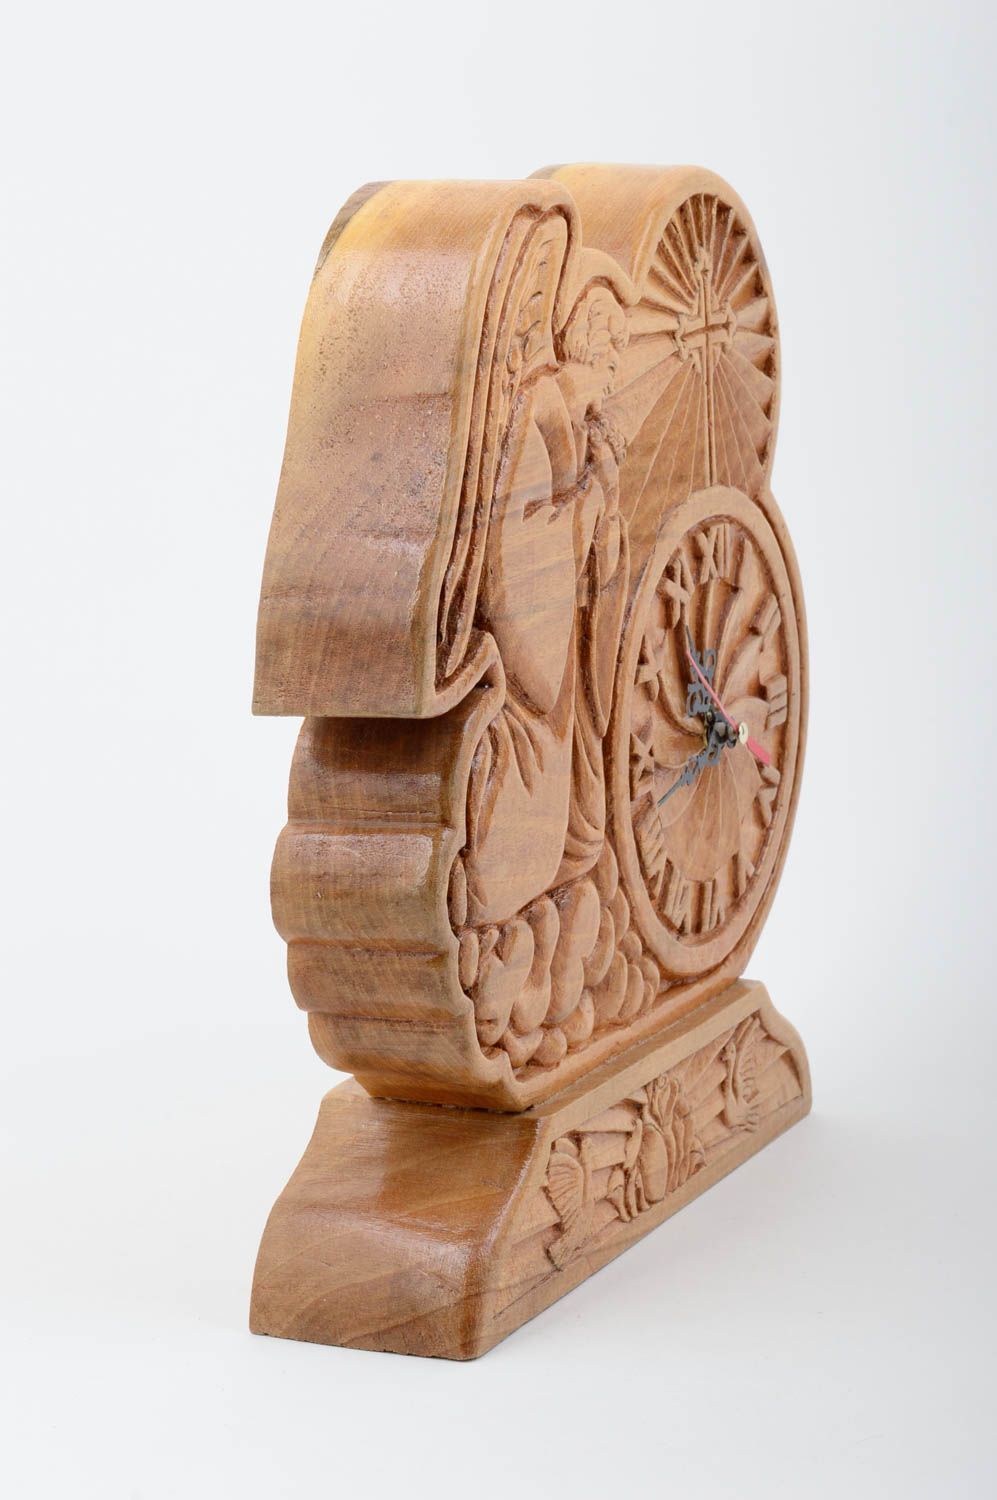 Stylish handmade wooden clock funky clock fireplace decorating ideas wood craft photo 2